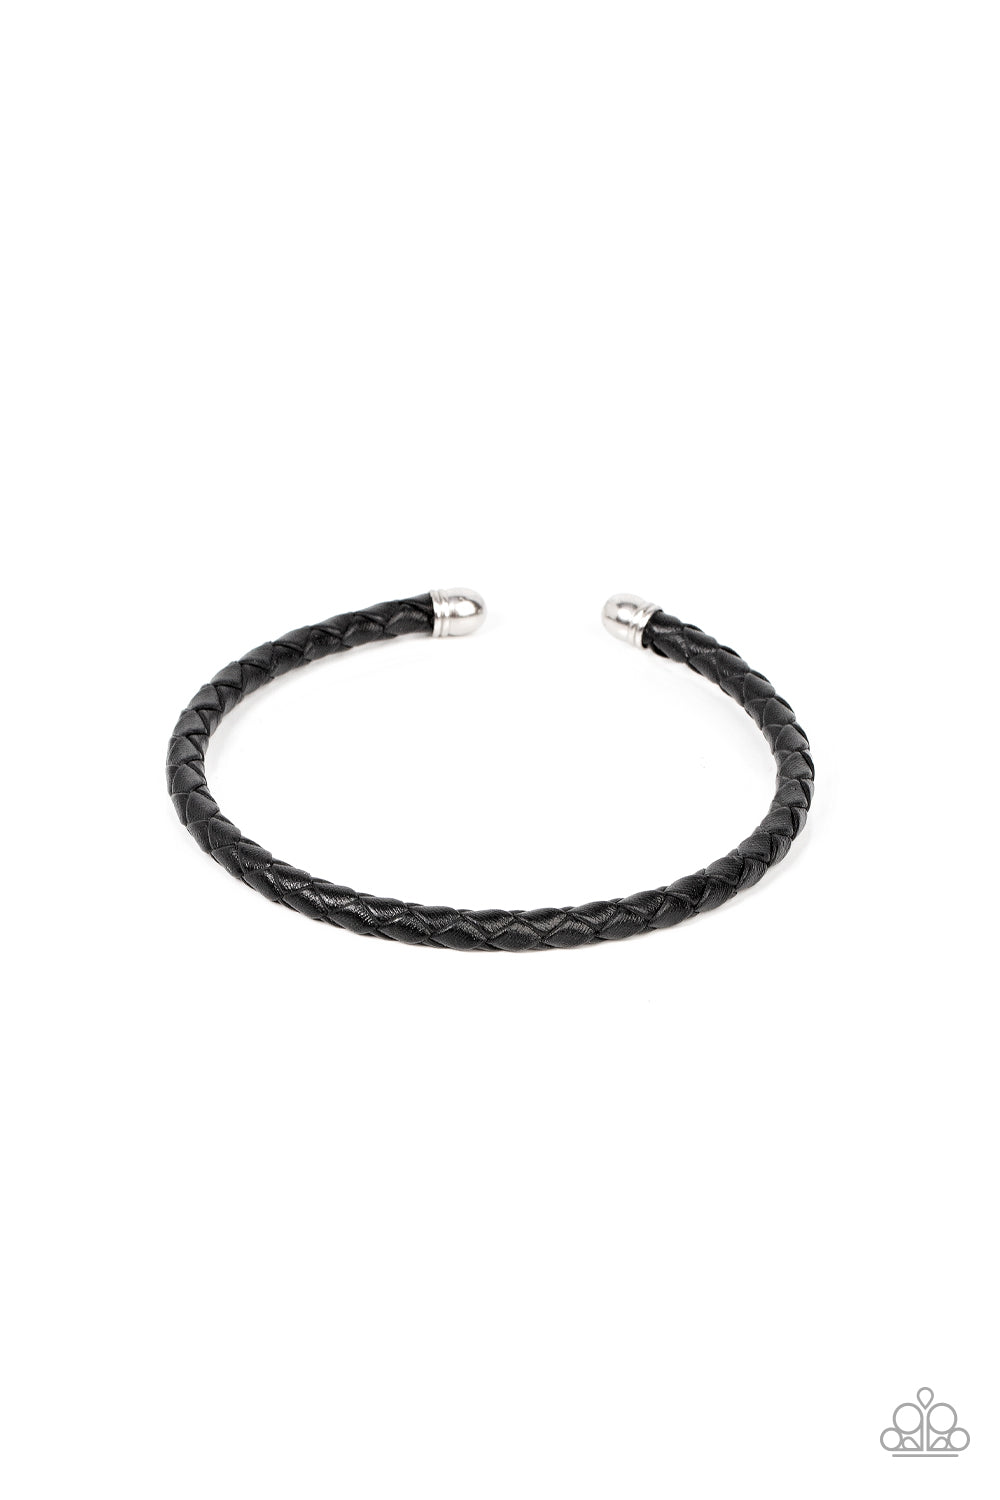 Rustic Wrangler Men's Black Leather Cuff Bracelet - Paparazzi Accessories- lightbox - CarasShop.com - $5 Jewelry by Cara Jewels